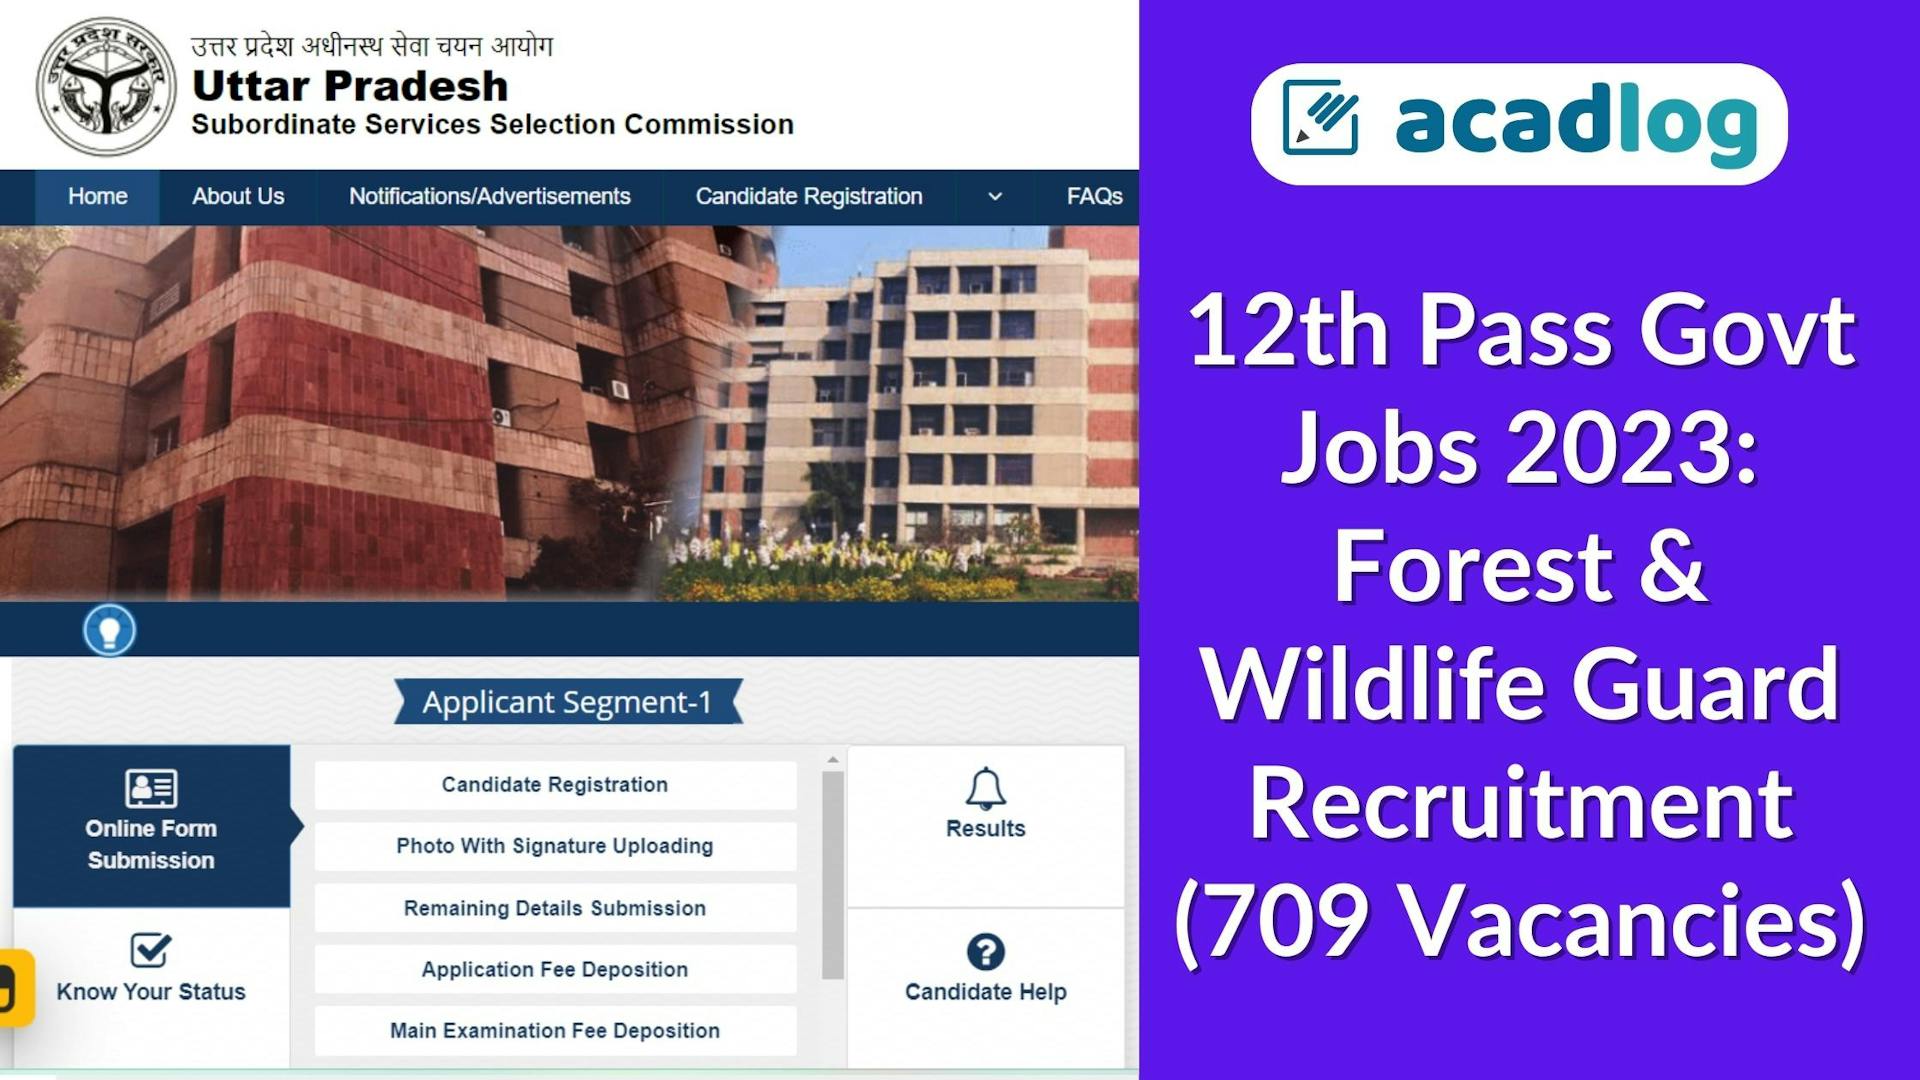 12th Pass Govt Jobs 2023: Forest & Wildlife Guard Recruitment (709 Vacancies)